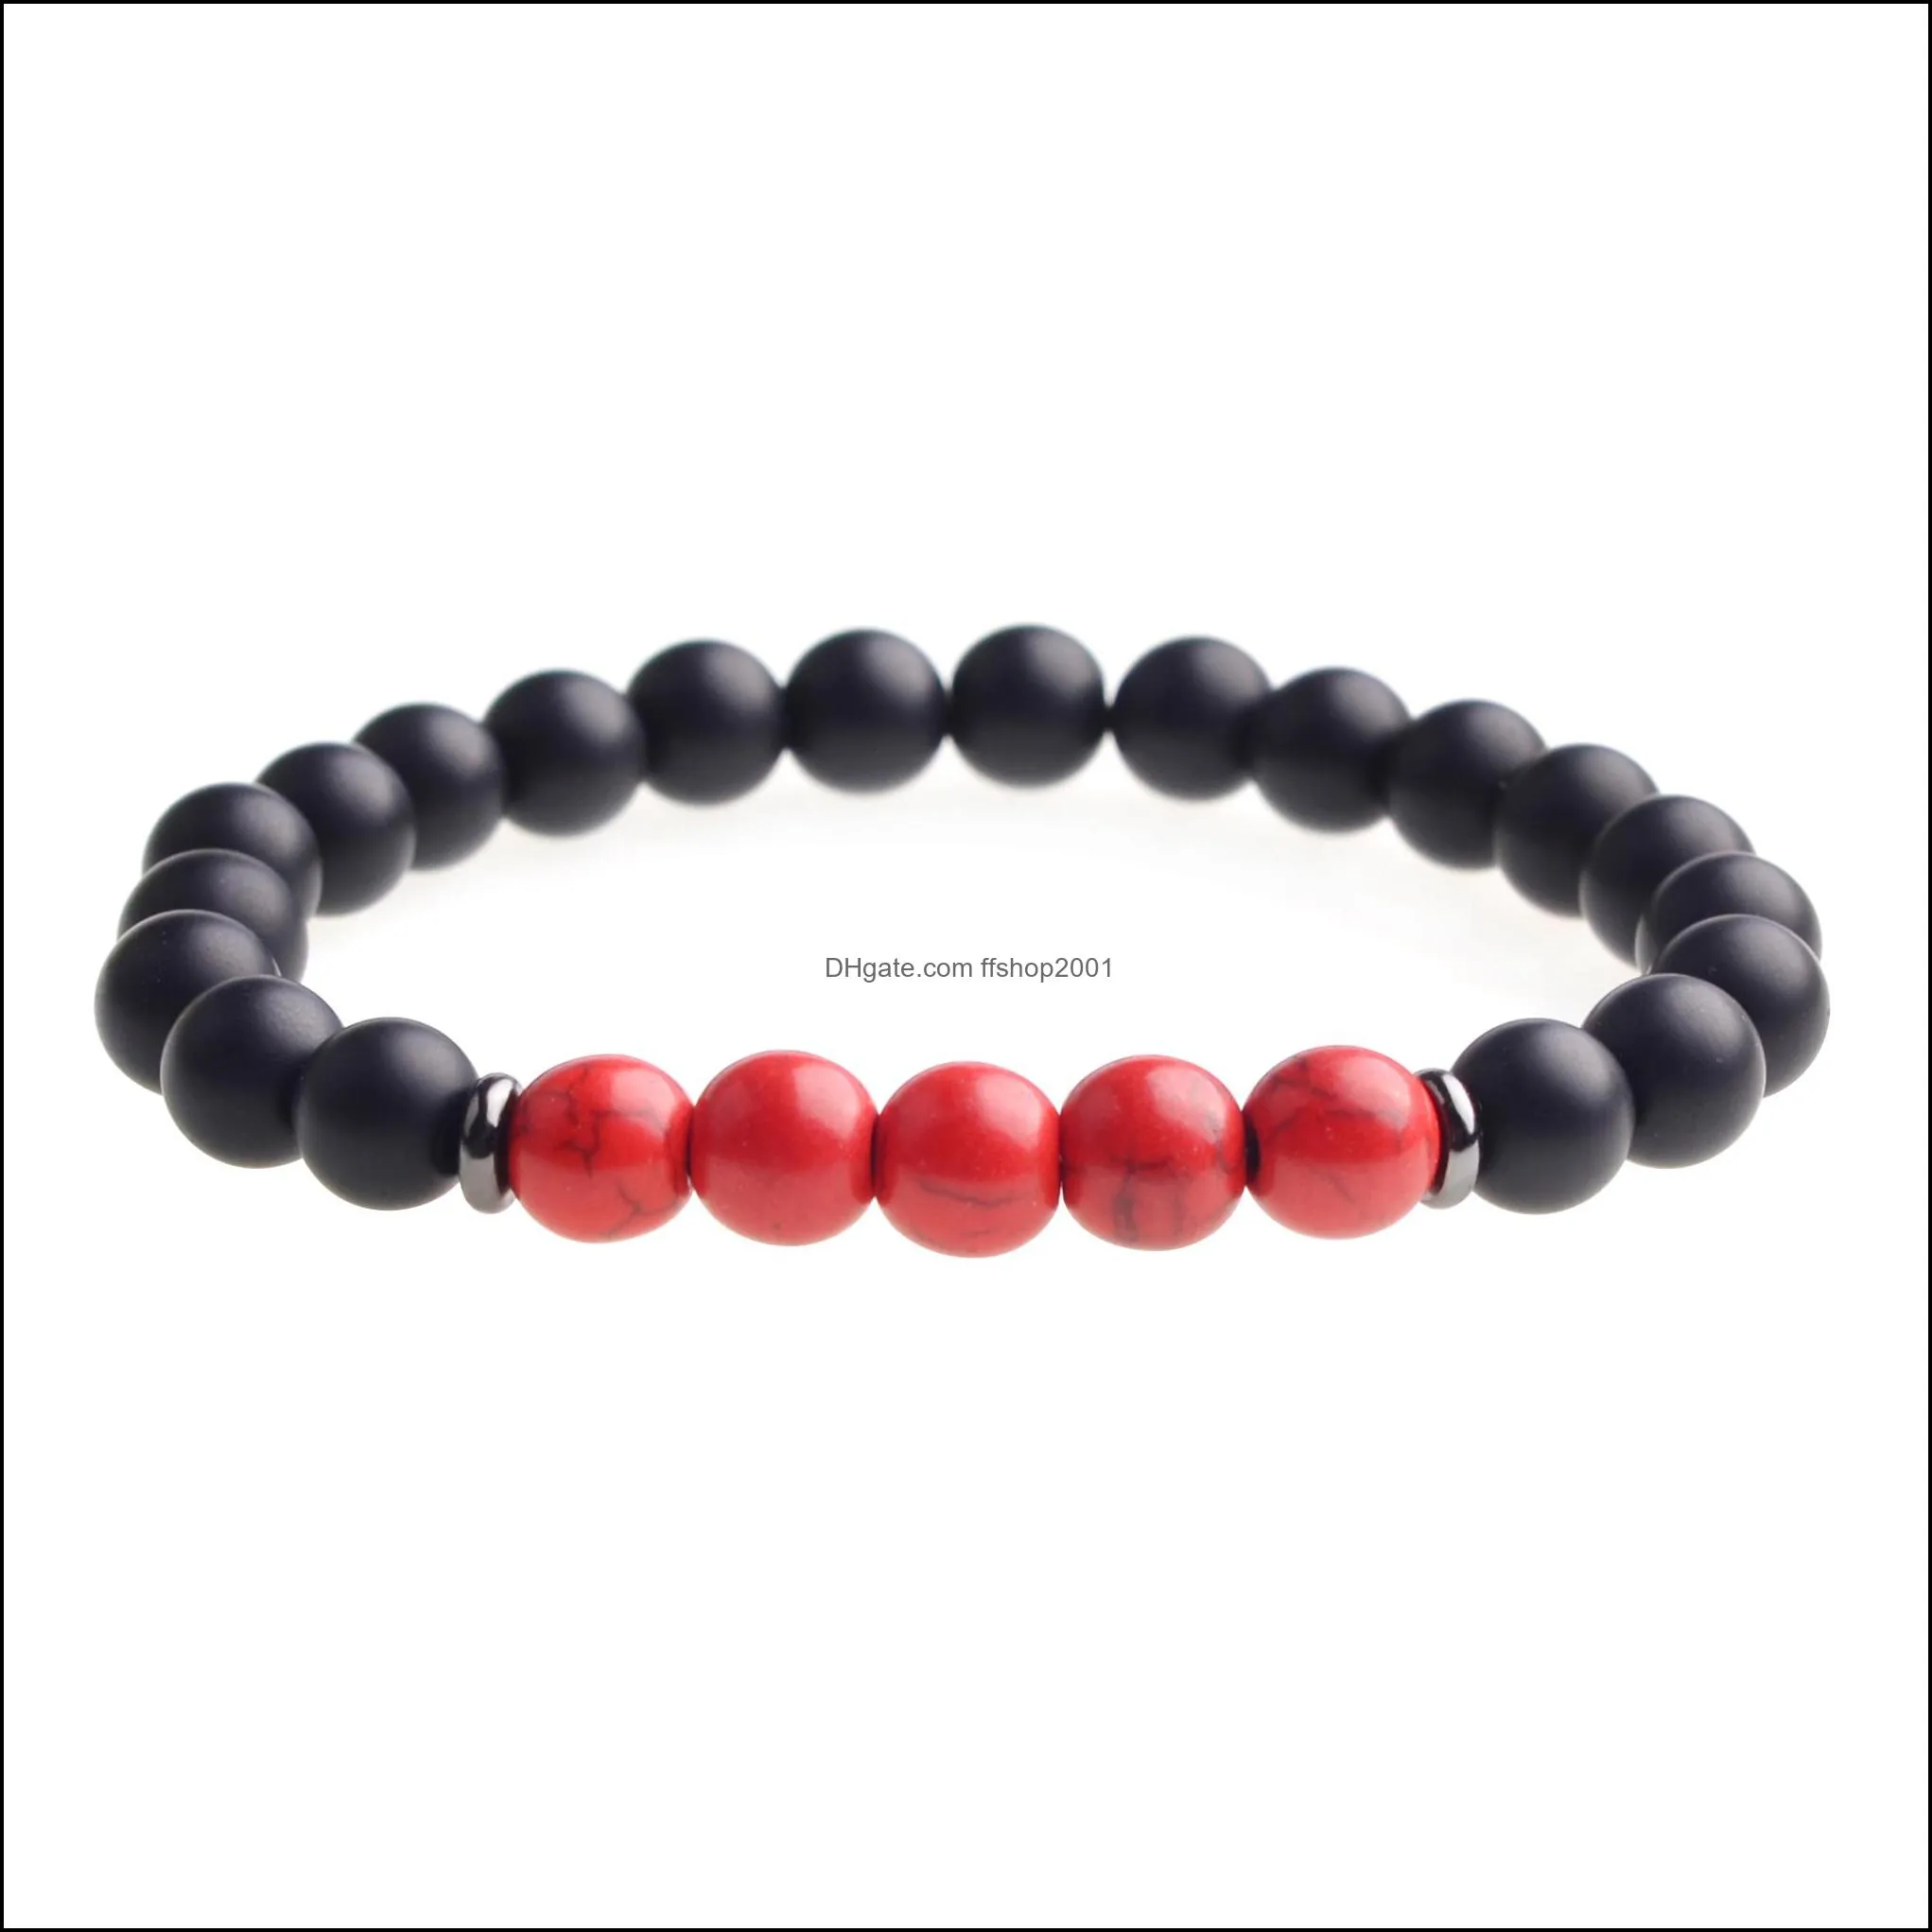 ambers lava stone natural stone bead bracelet chakra stone jewelry women men gift yoga stretch bracelet